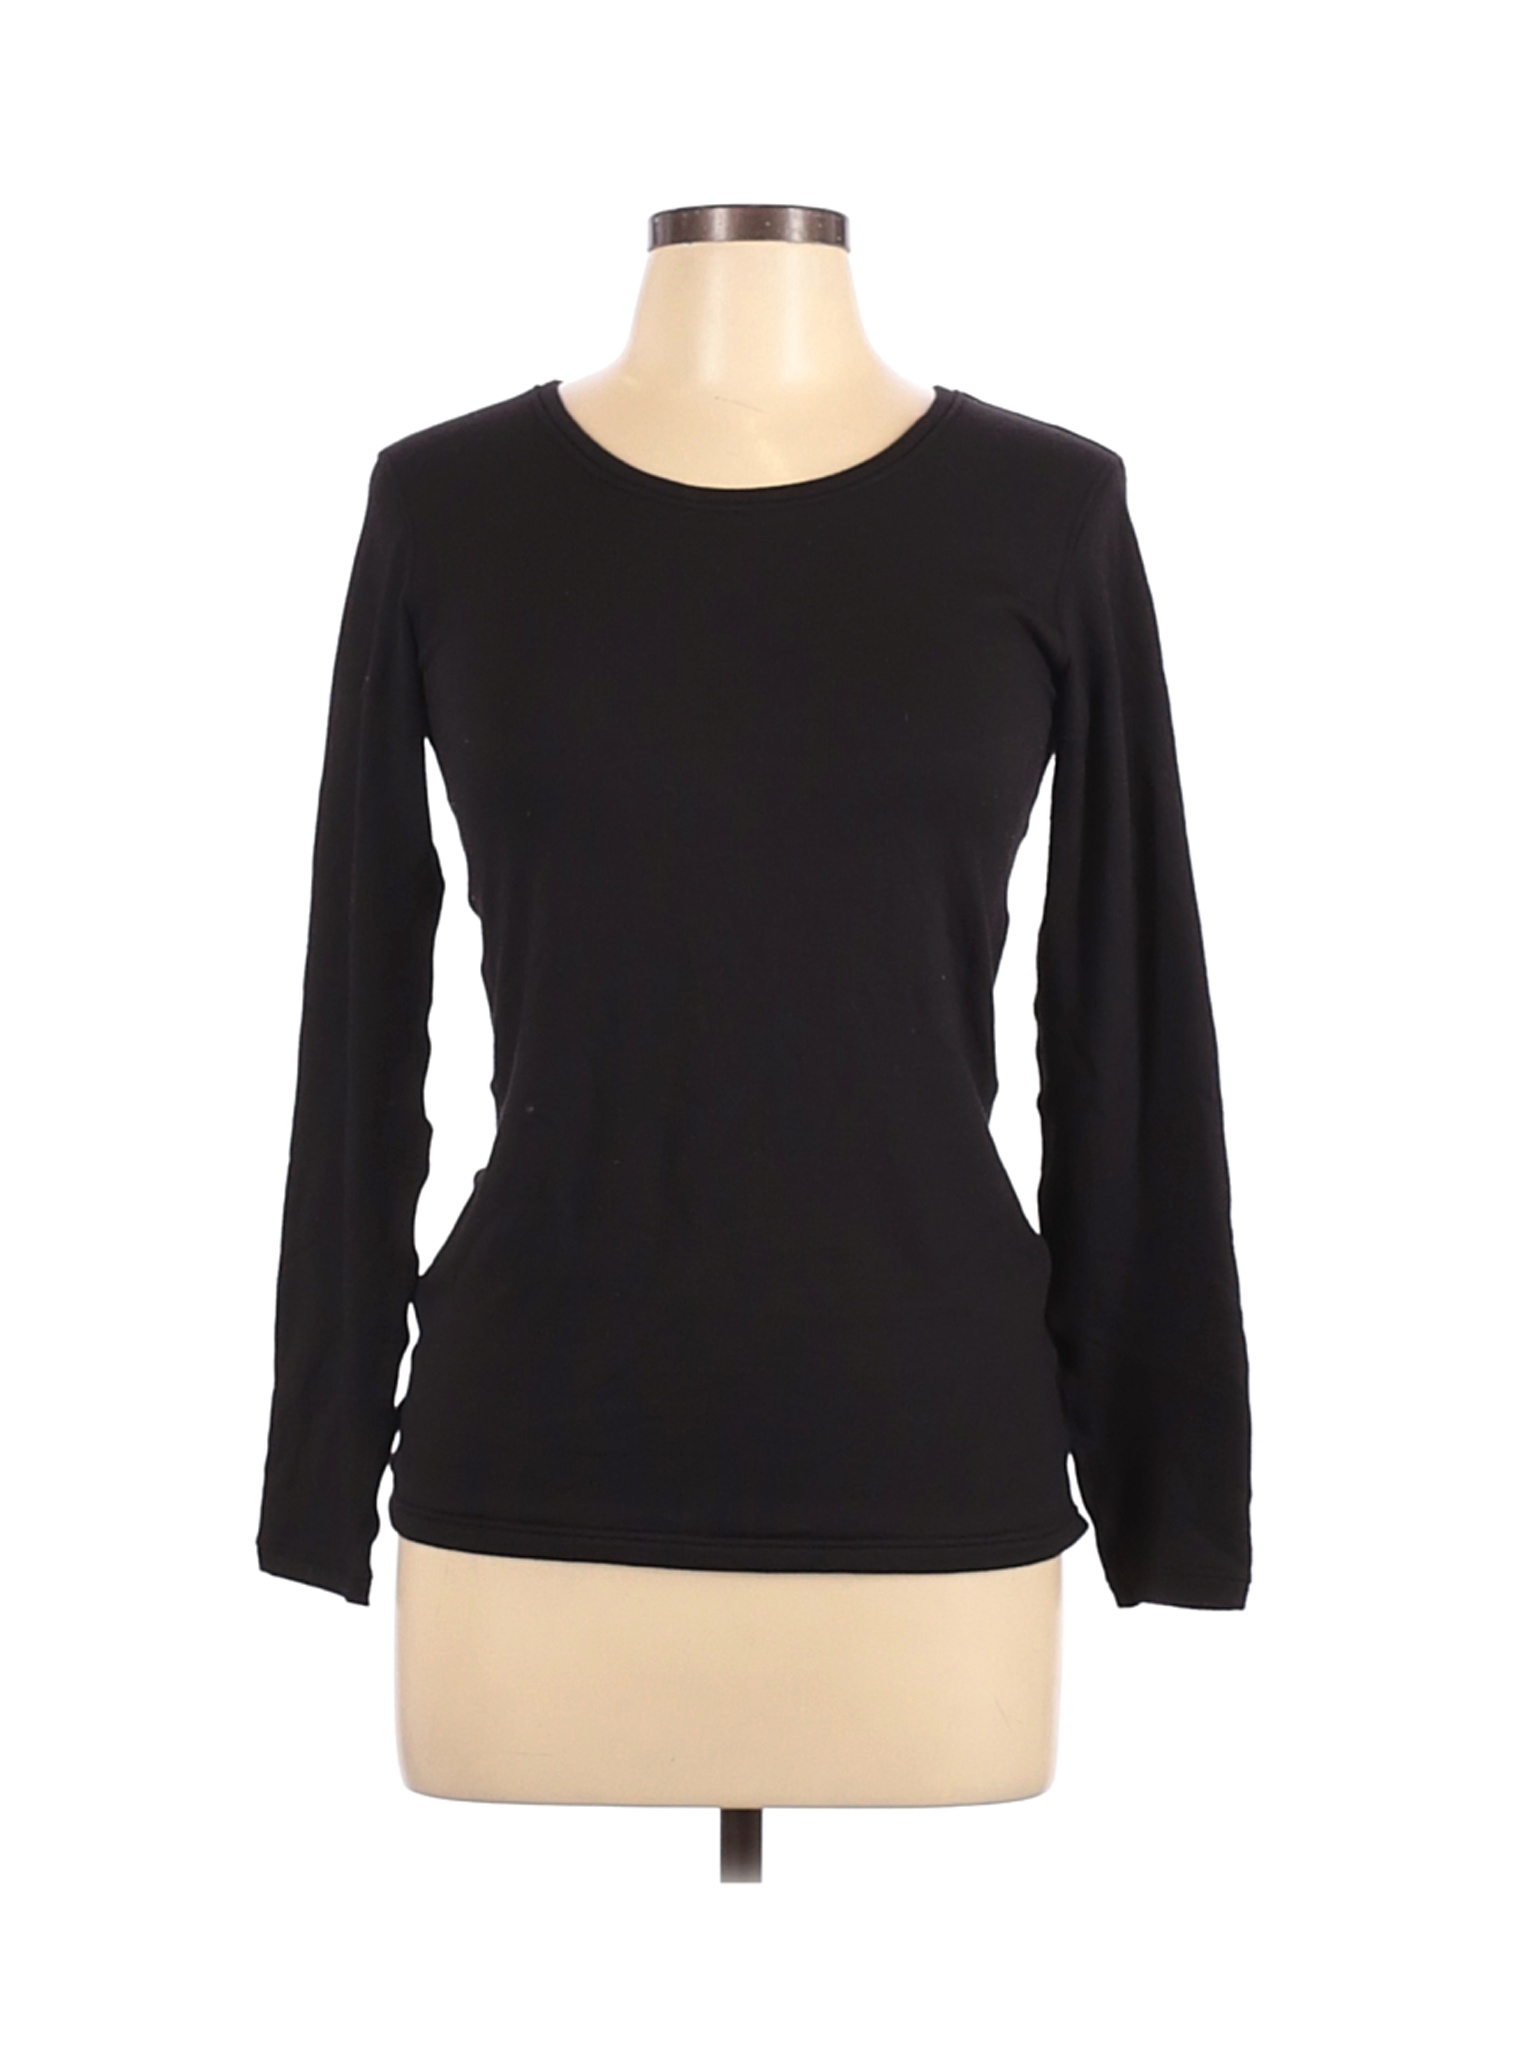 Uniqlo Women Black Long Sleeve T-Shirt L | eBay